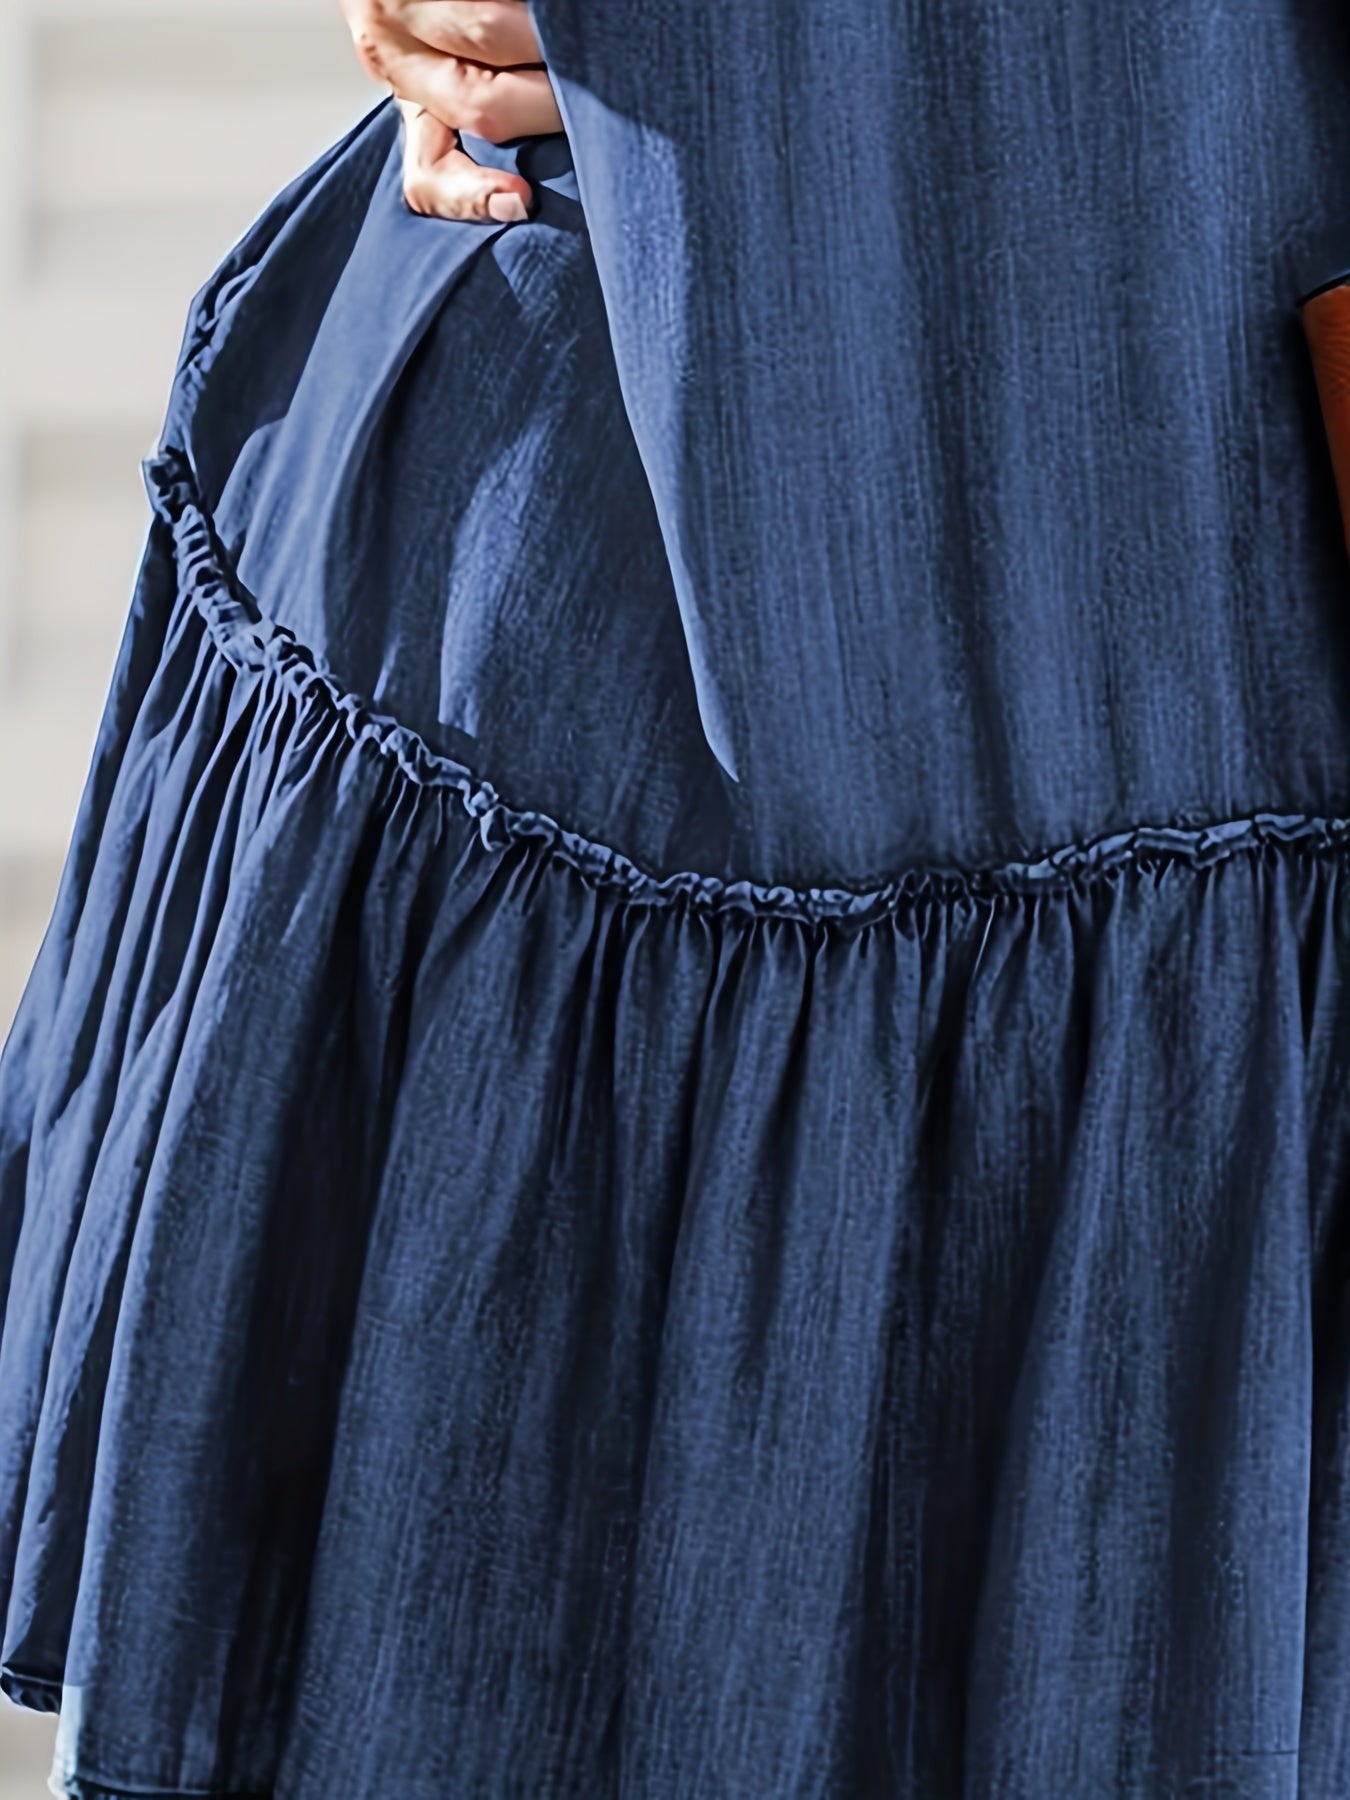 Lovevop-Blue Long Sleeves Denim Dress, Loose Fit Single-Breasted Button Fashion Denim Dress, Women's Denim Clothing